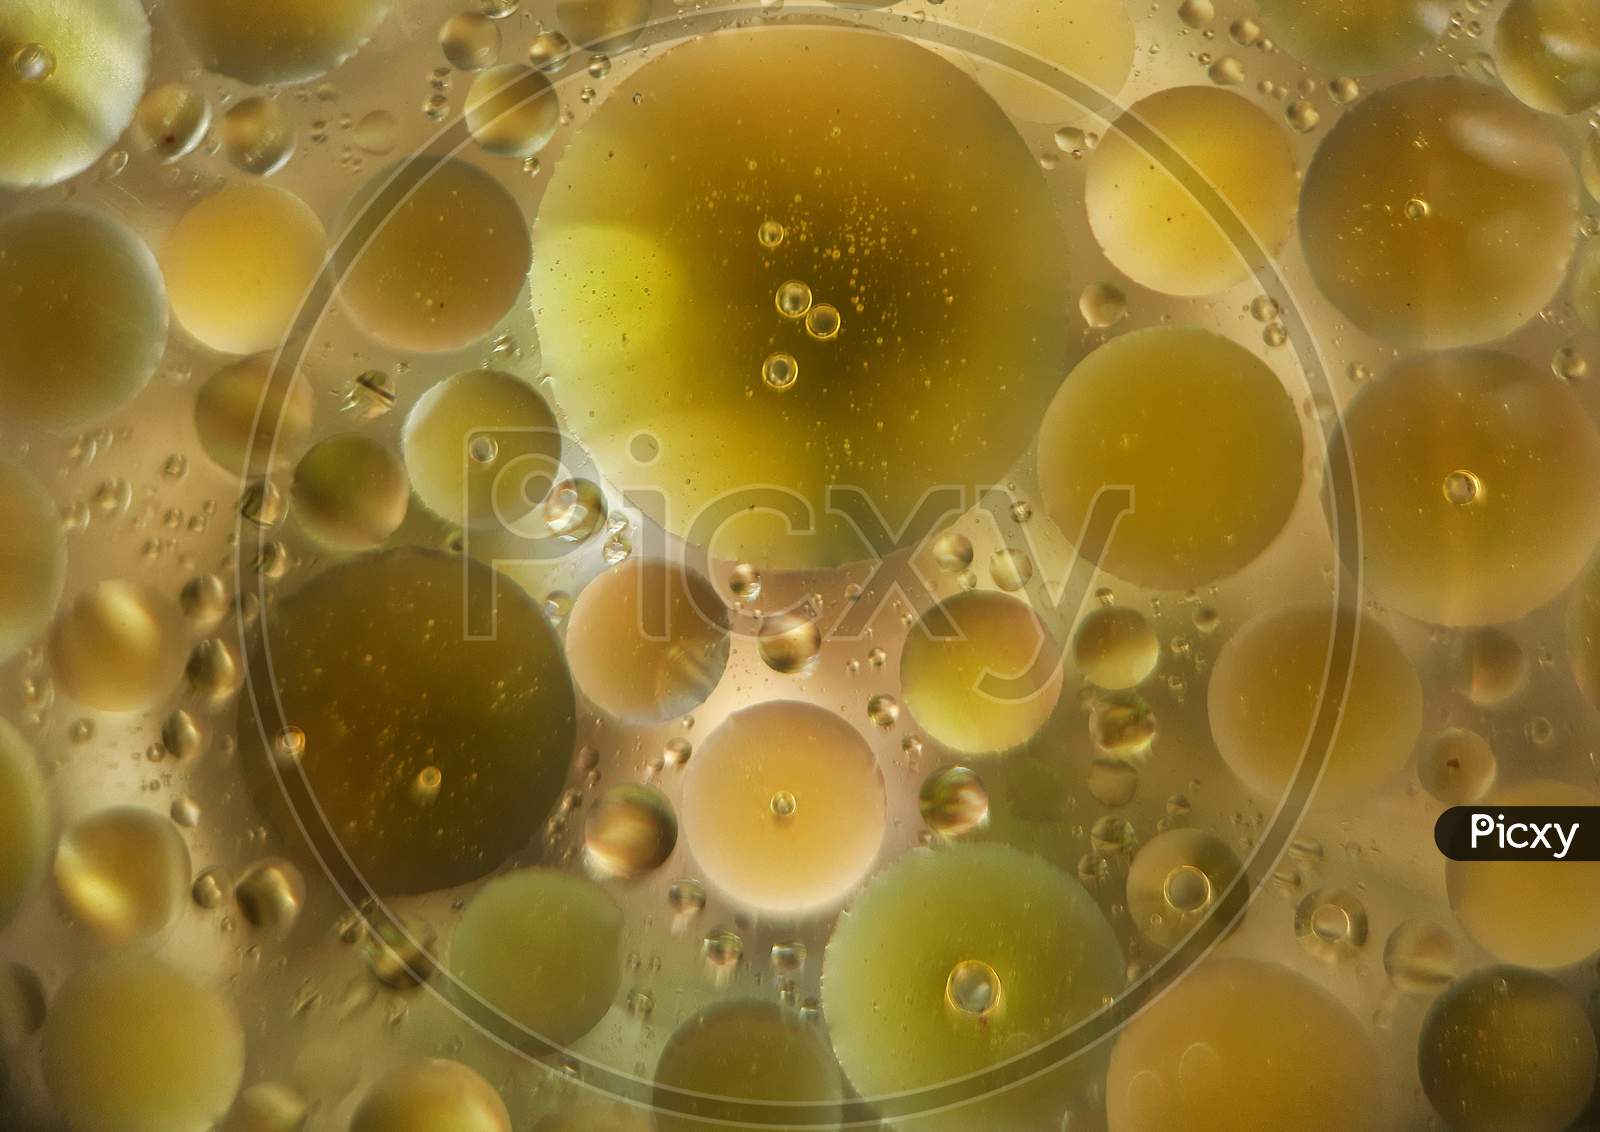 Detergent and oil in water, macroshot